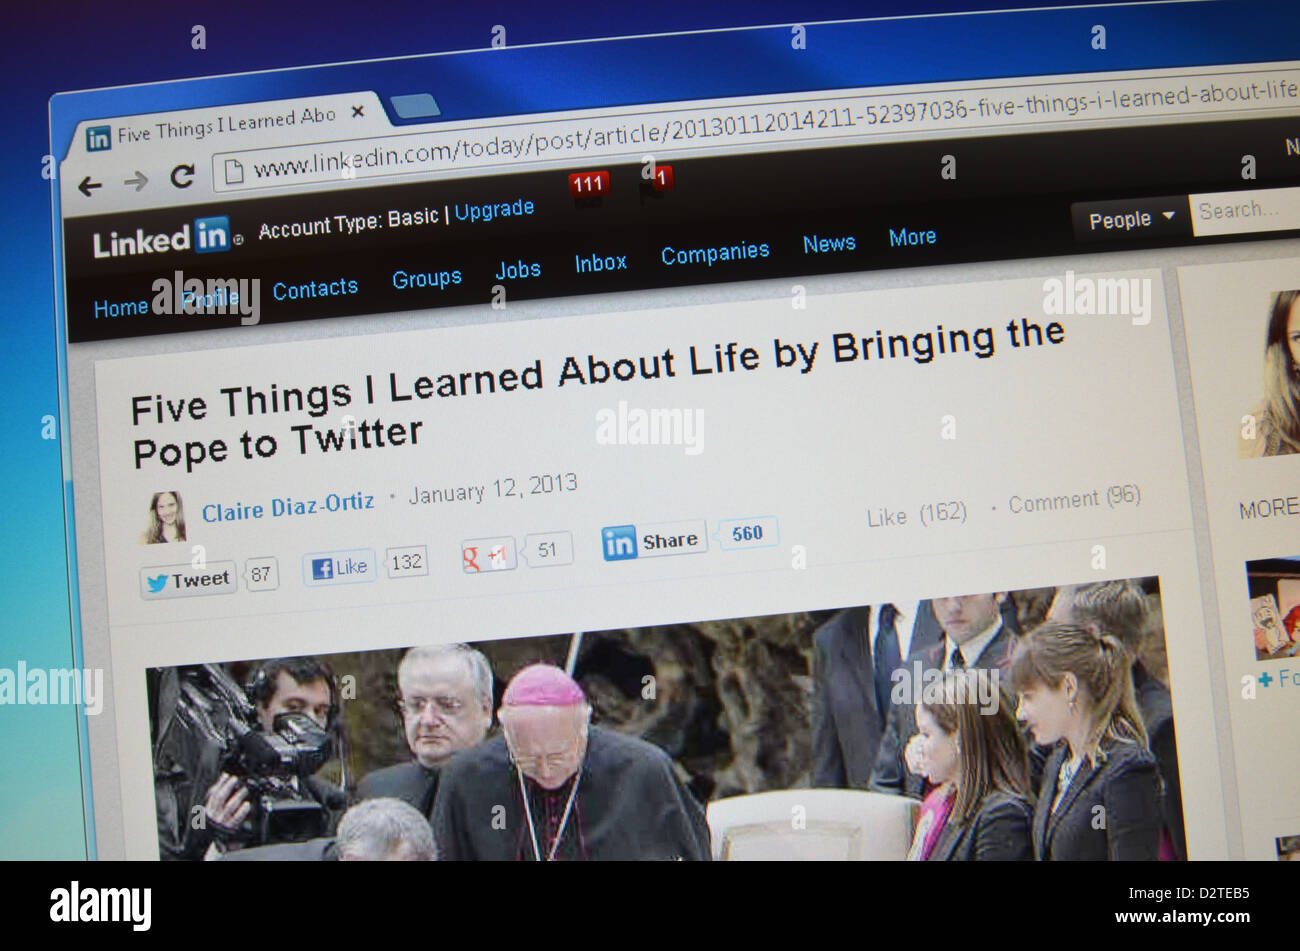 Linkedin.com pope blog website screenshot Stock Photo